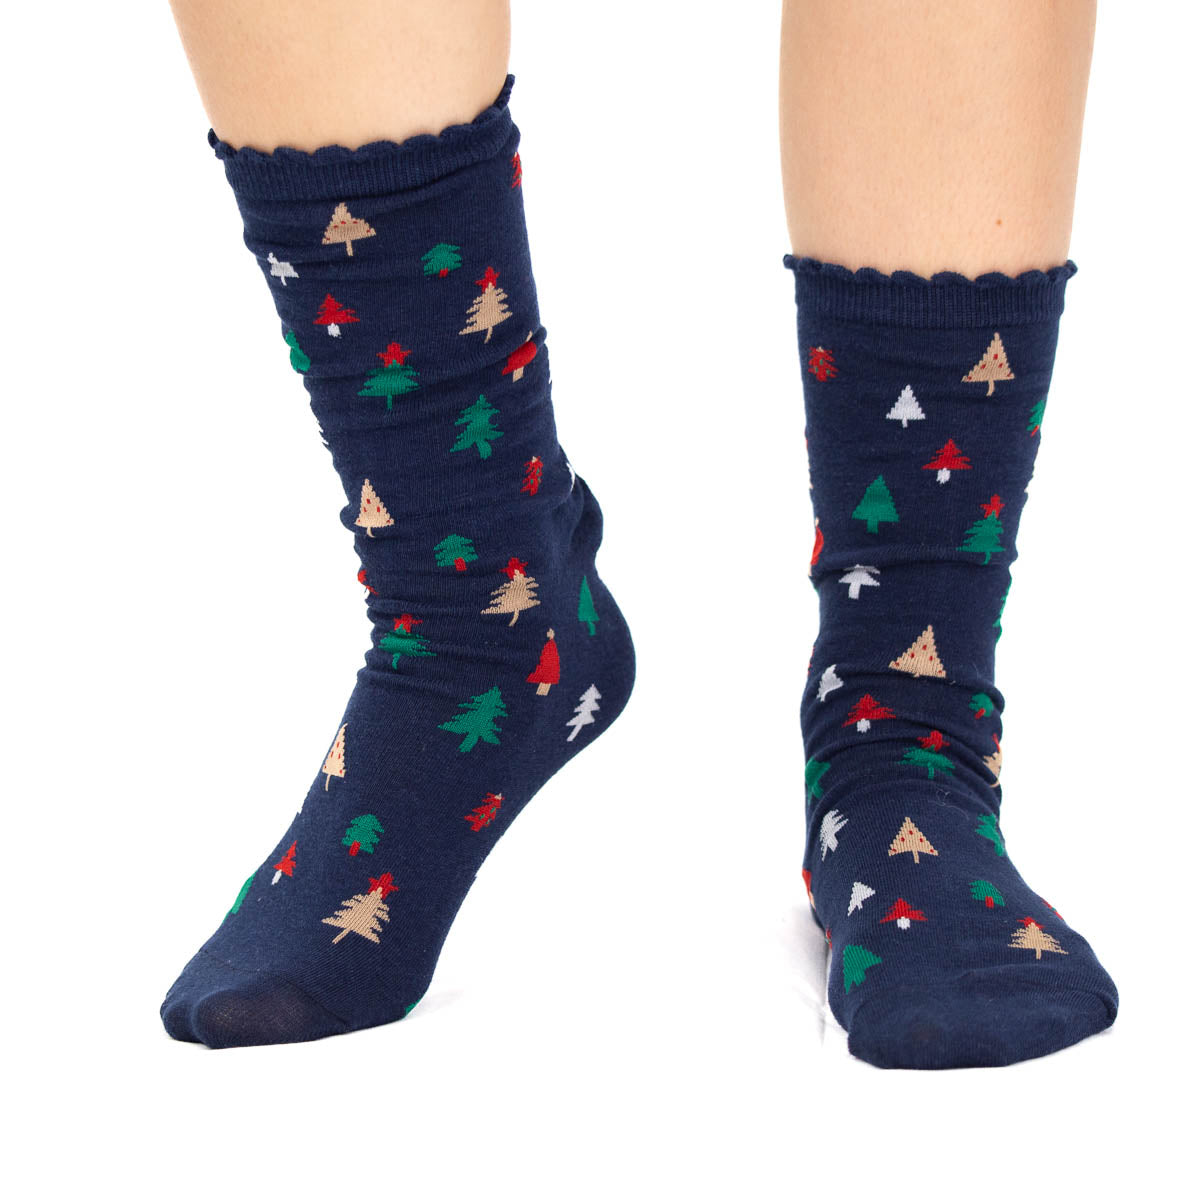 Festive scalloped holiday socks